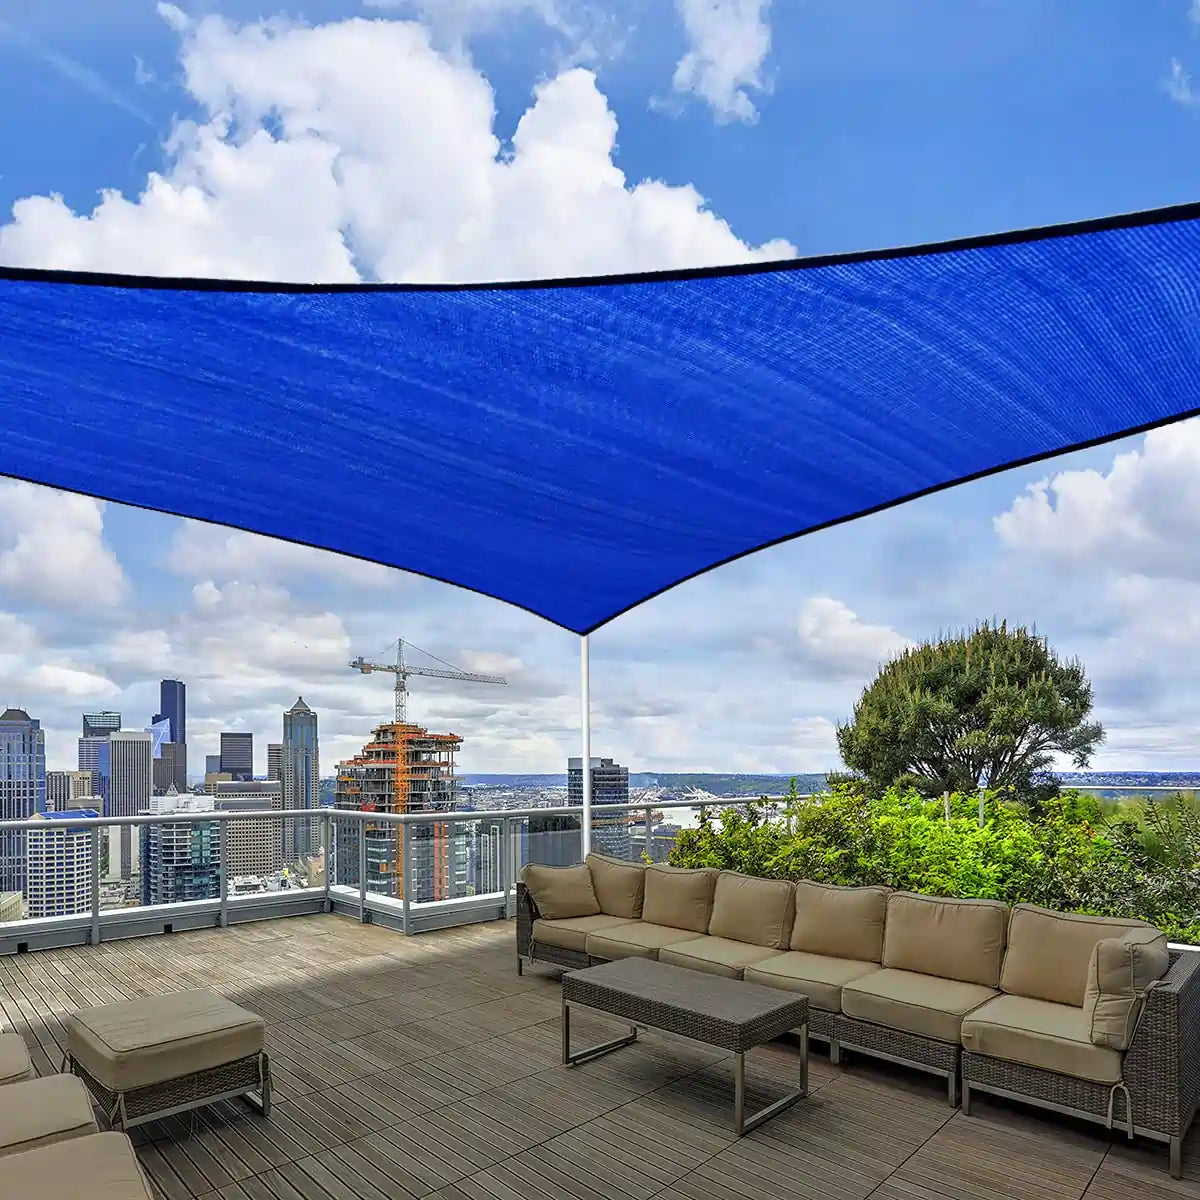 blue rectangular sunshade sail in the patio